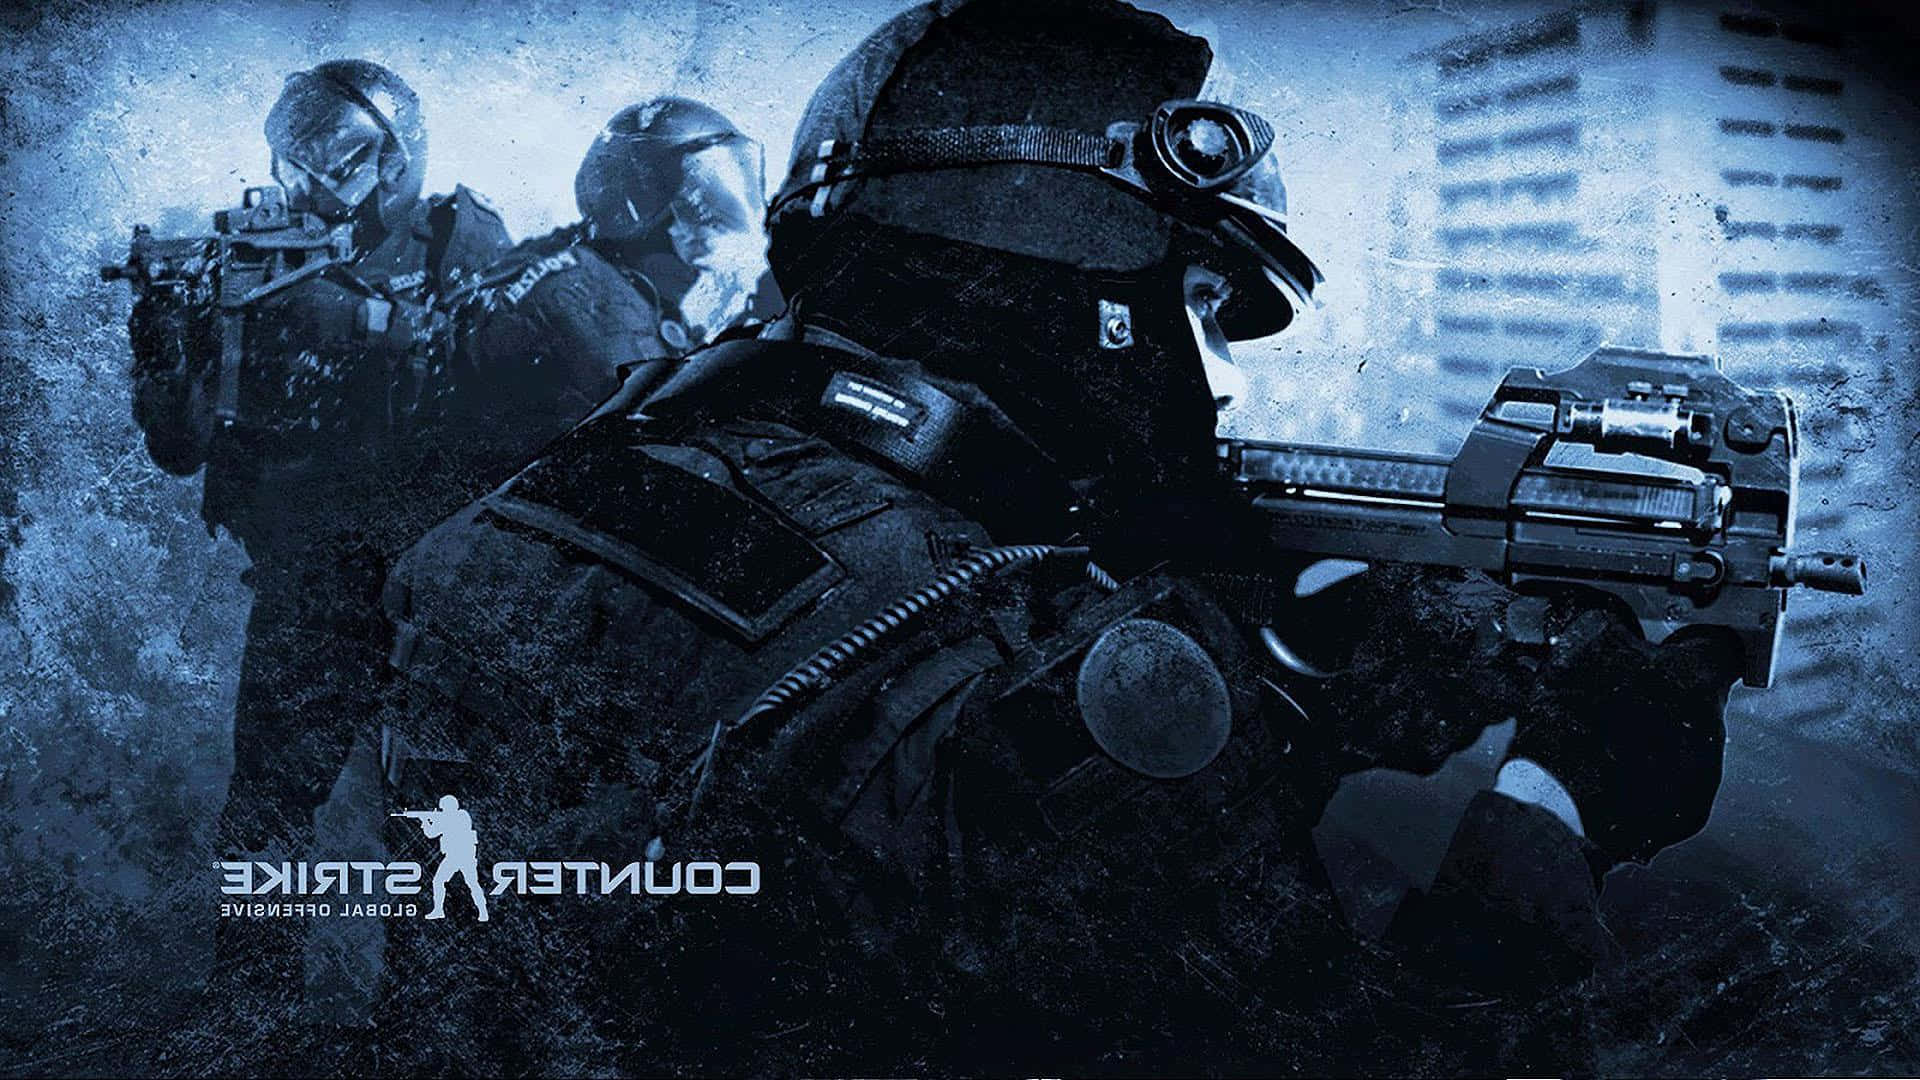 Overlist, overmand og overleve: Lær at dominere slagmarken i Counter-Strike Wallpaper